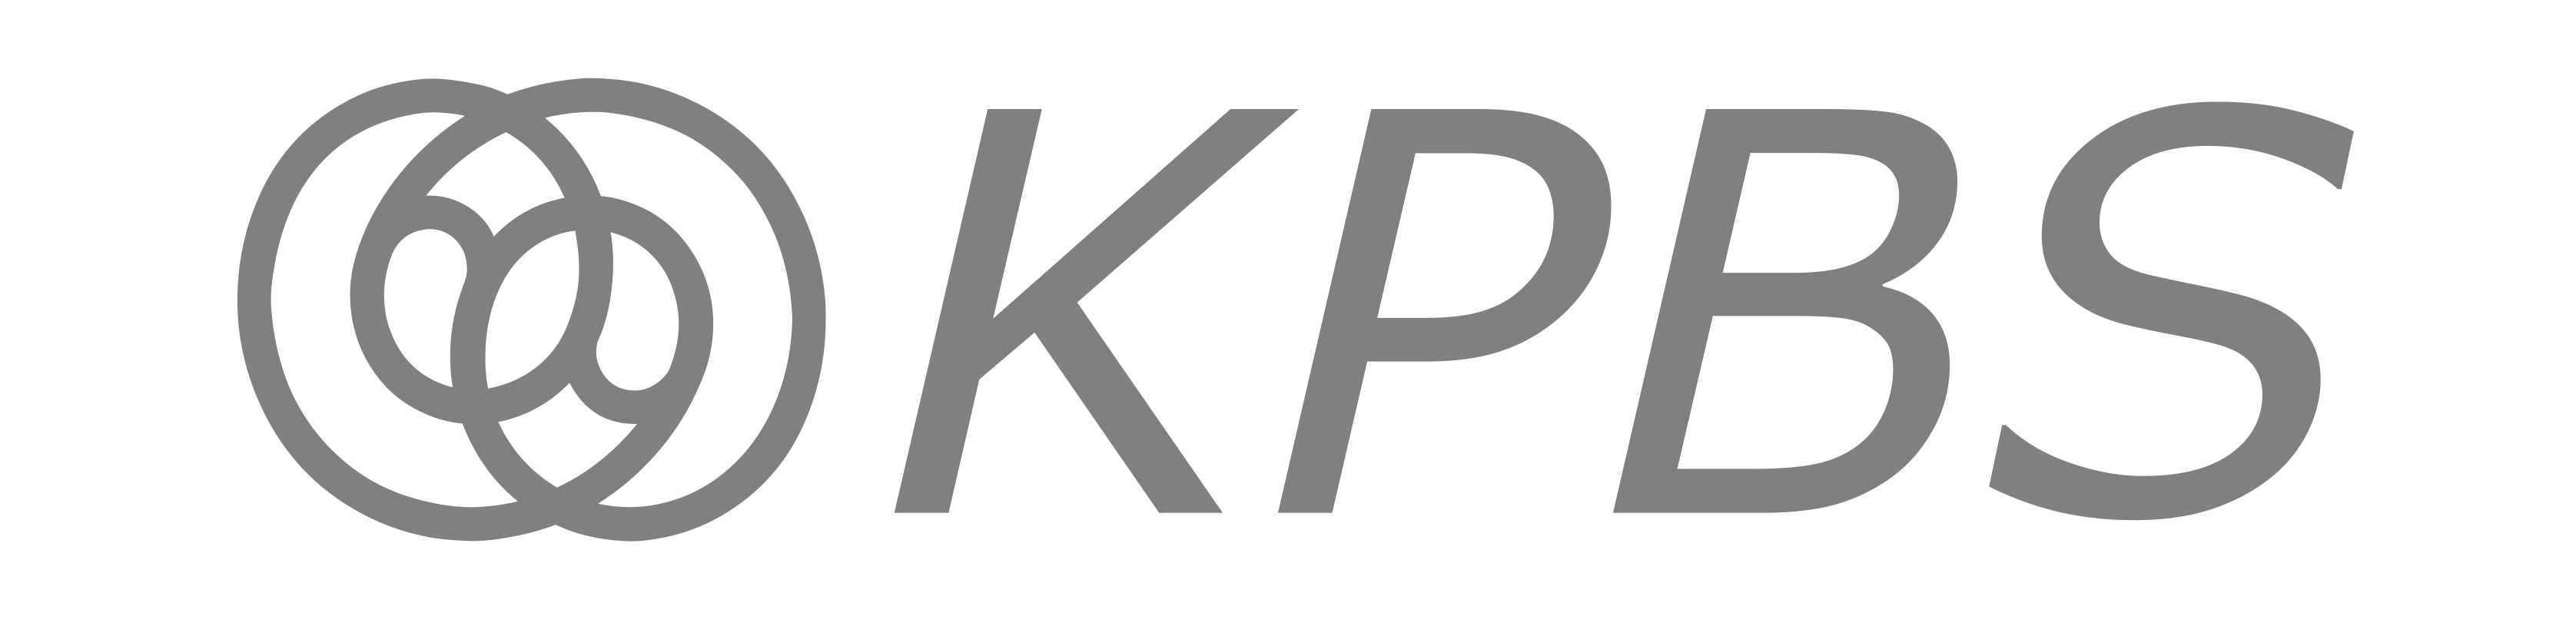 KPBS - Krikunov & Partners Business Systems - КПБС - Крикунов и Партнеры Бизнес Системы